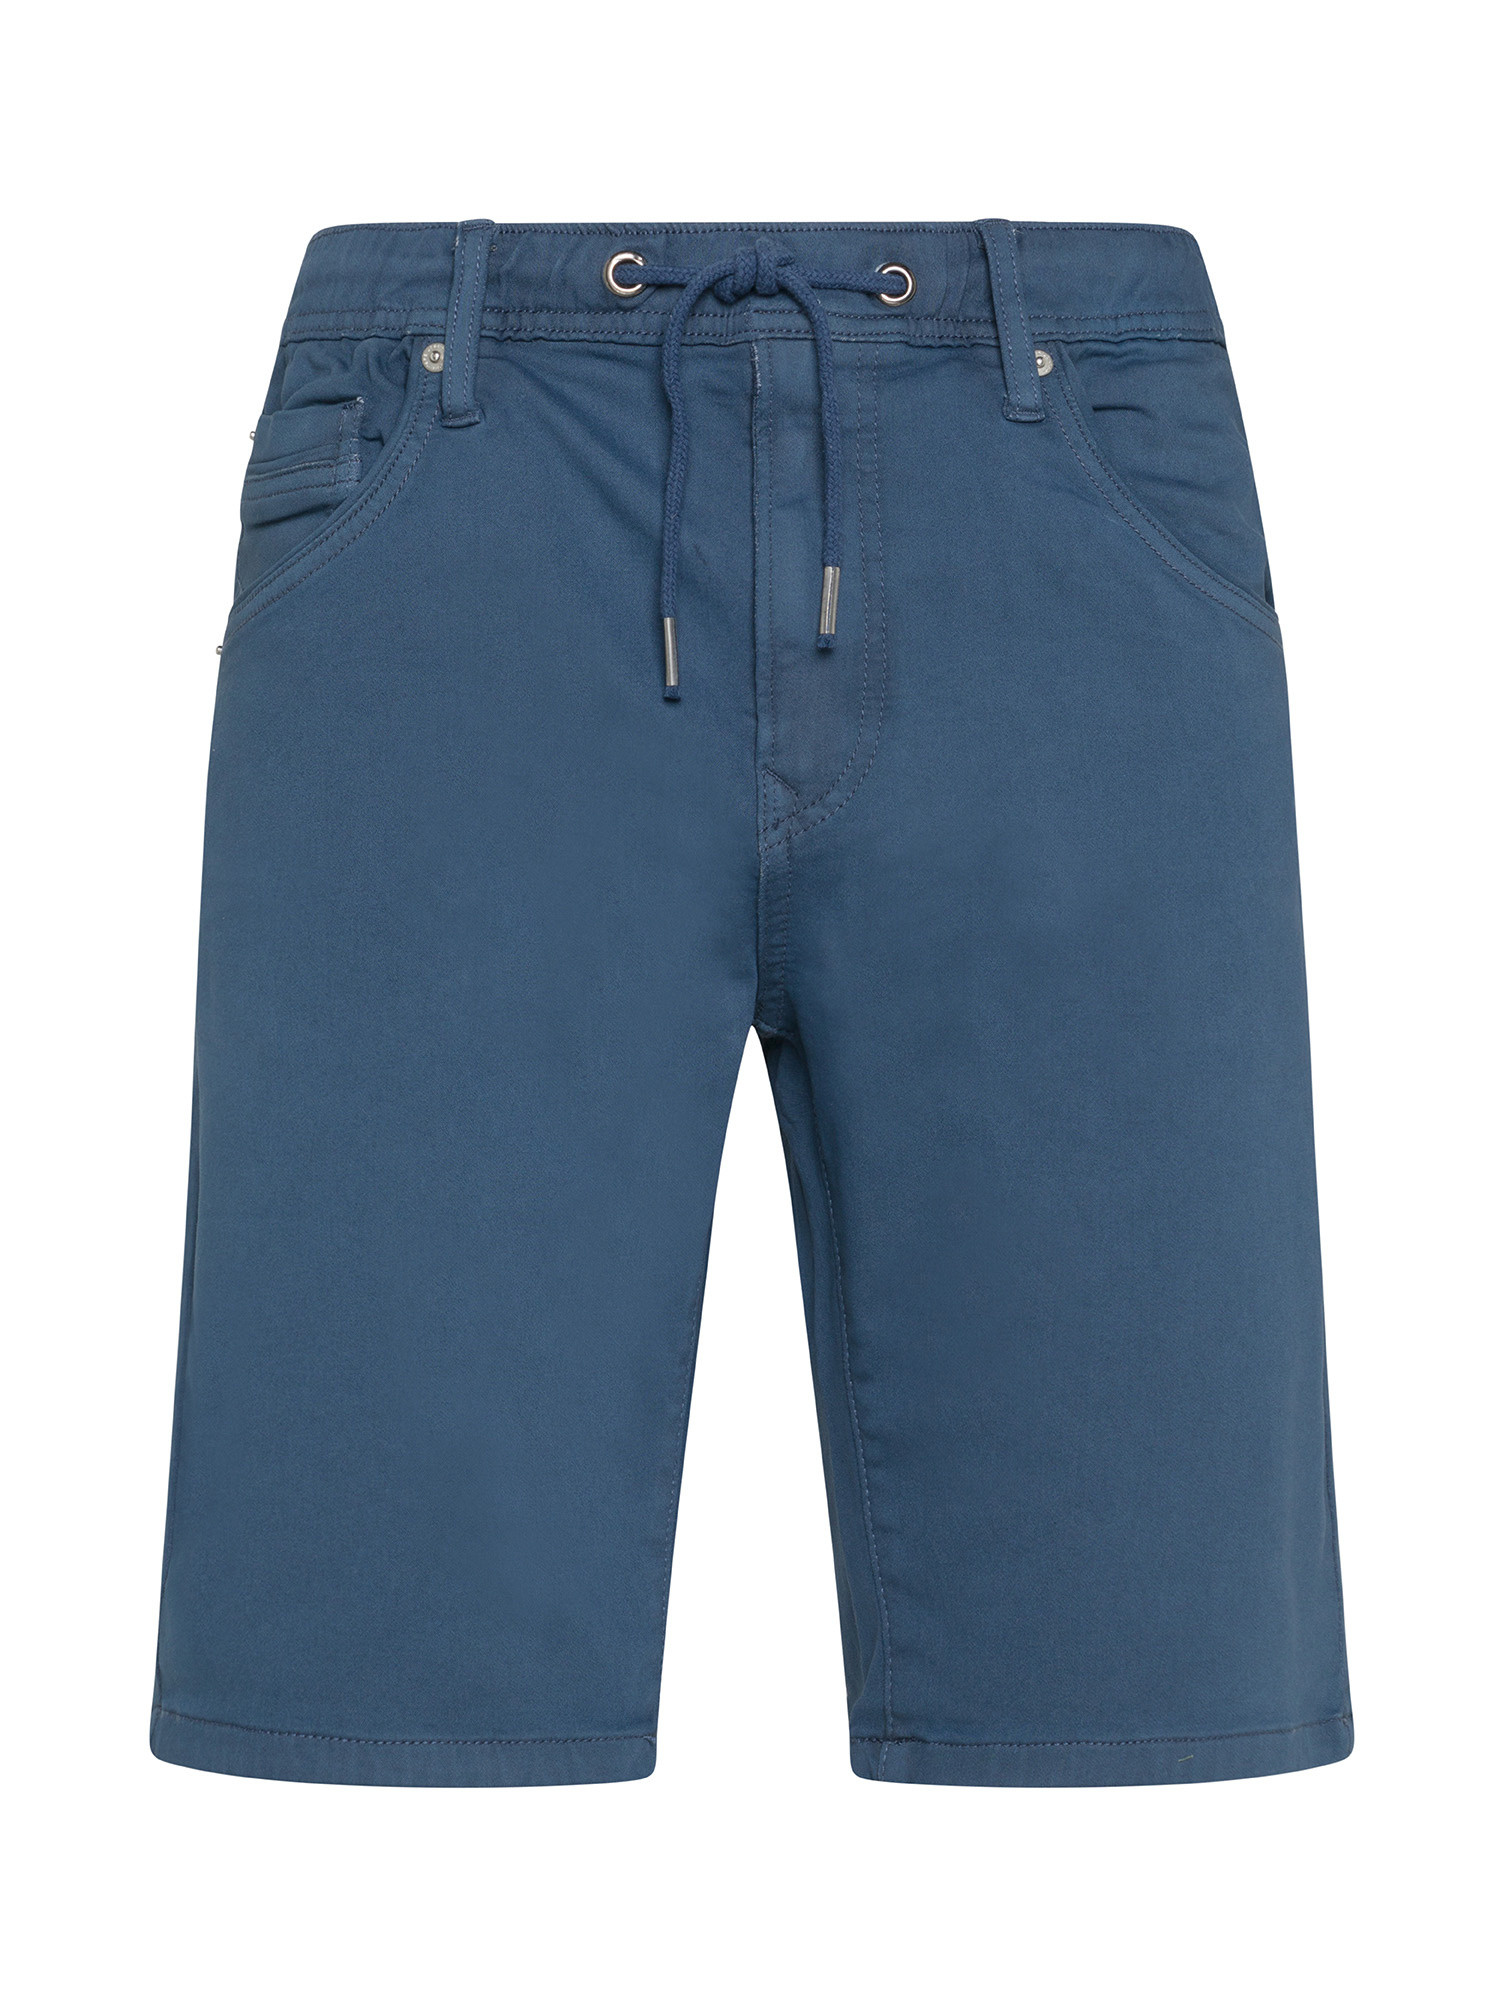 Pepe Jeans - Bermuda cinque tasche slim fit, Denim, large image number 0